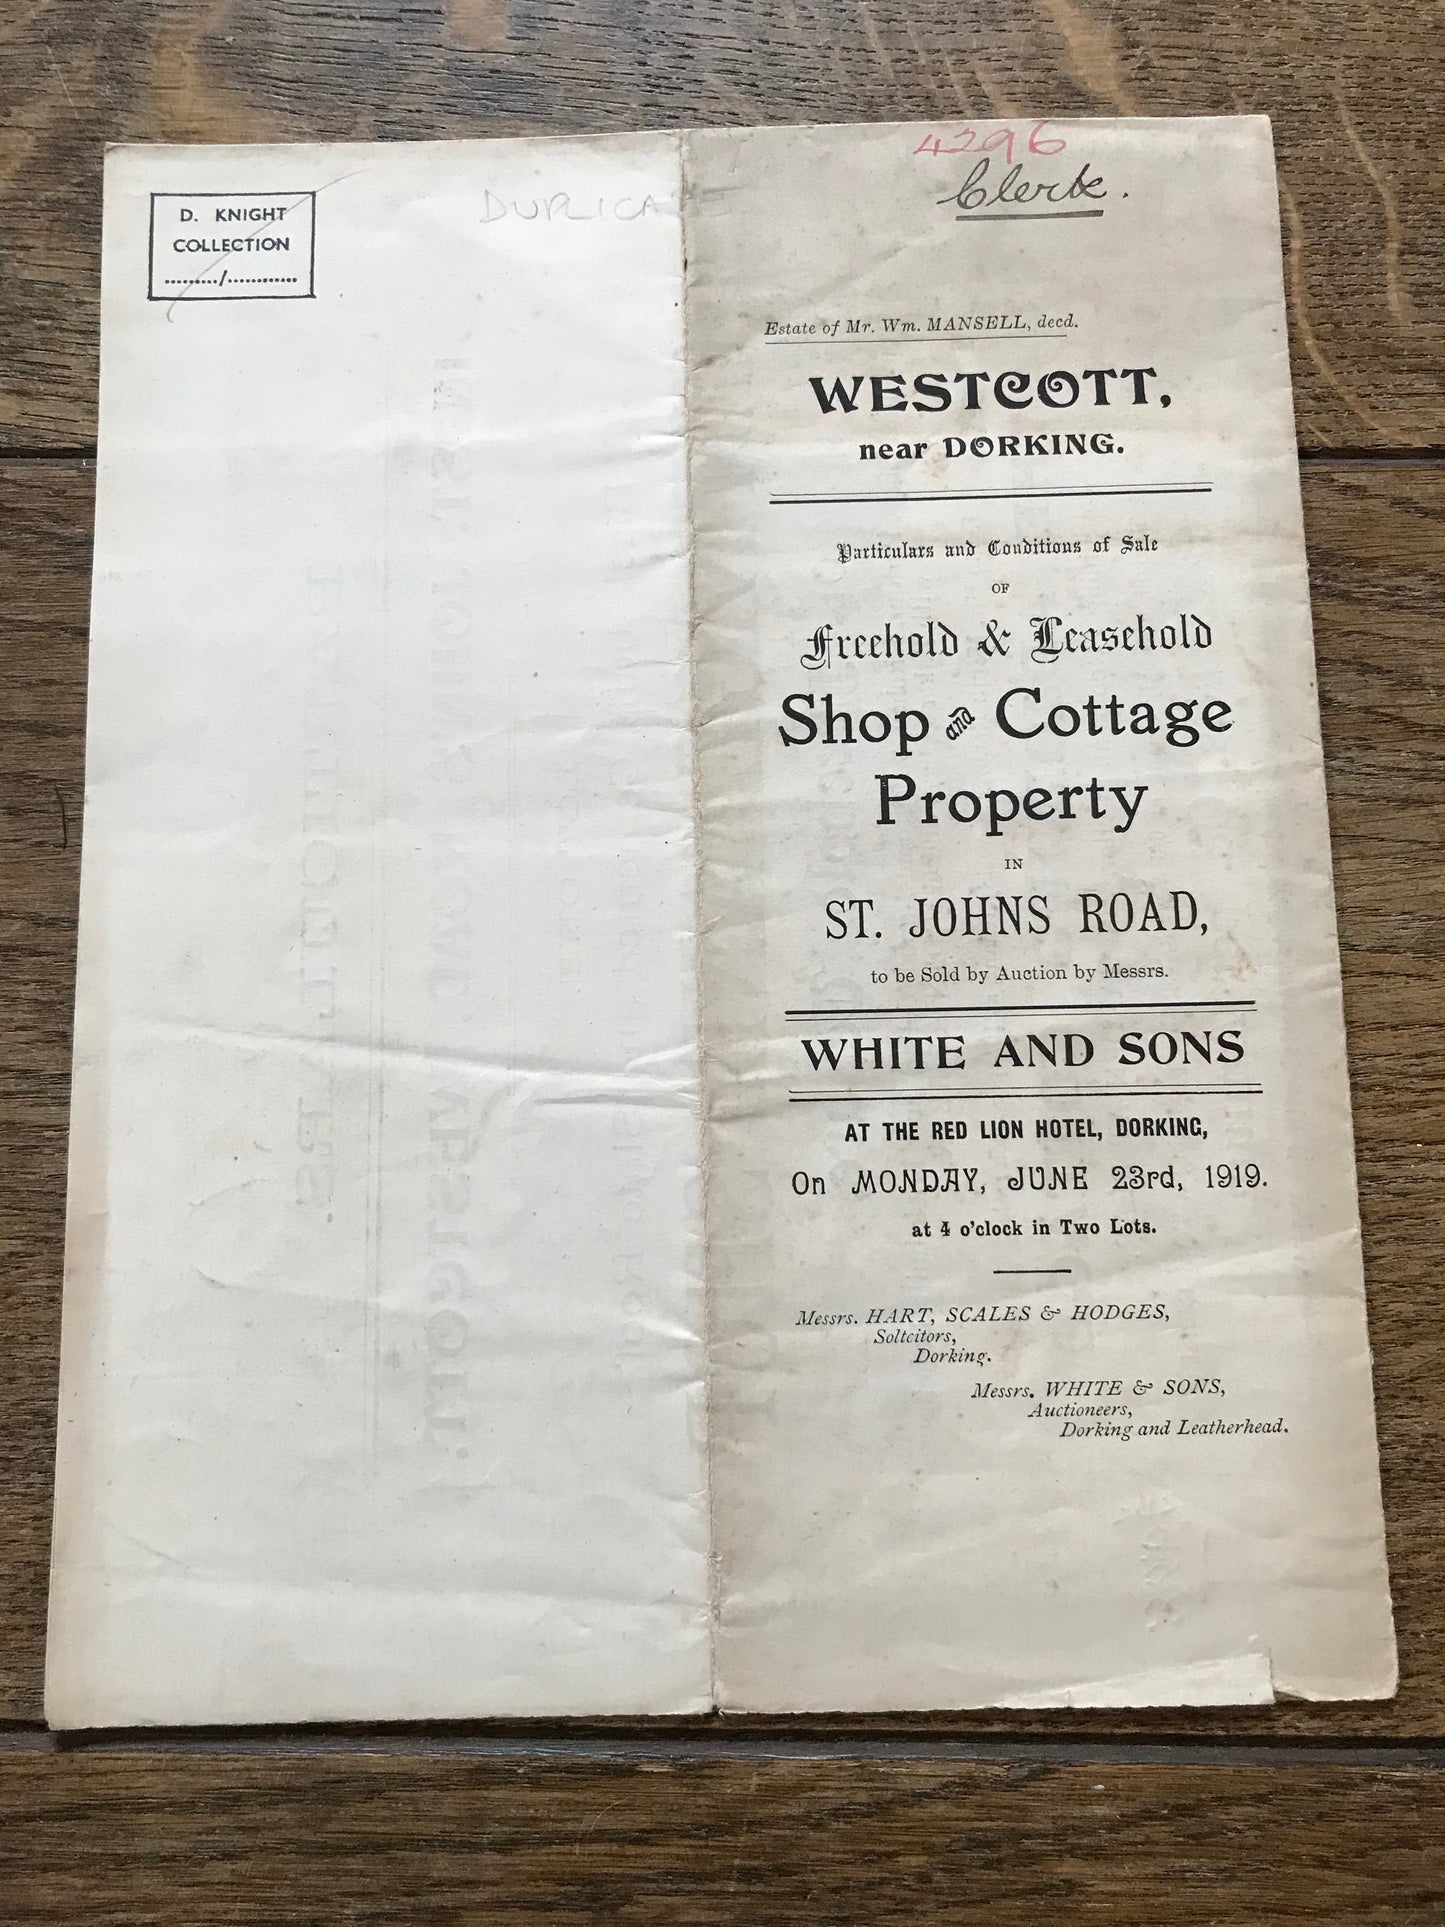 Shop & Cottage, St. John's Road, Westcott 1919 Sales Particulars